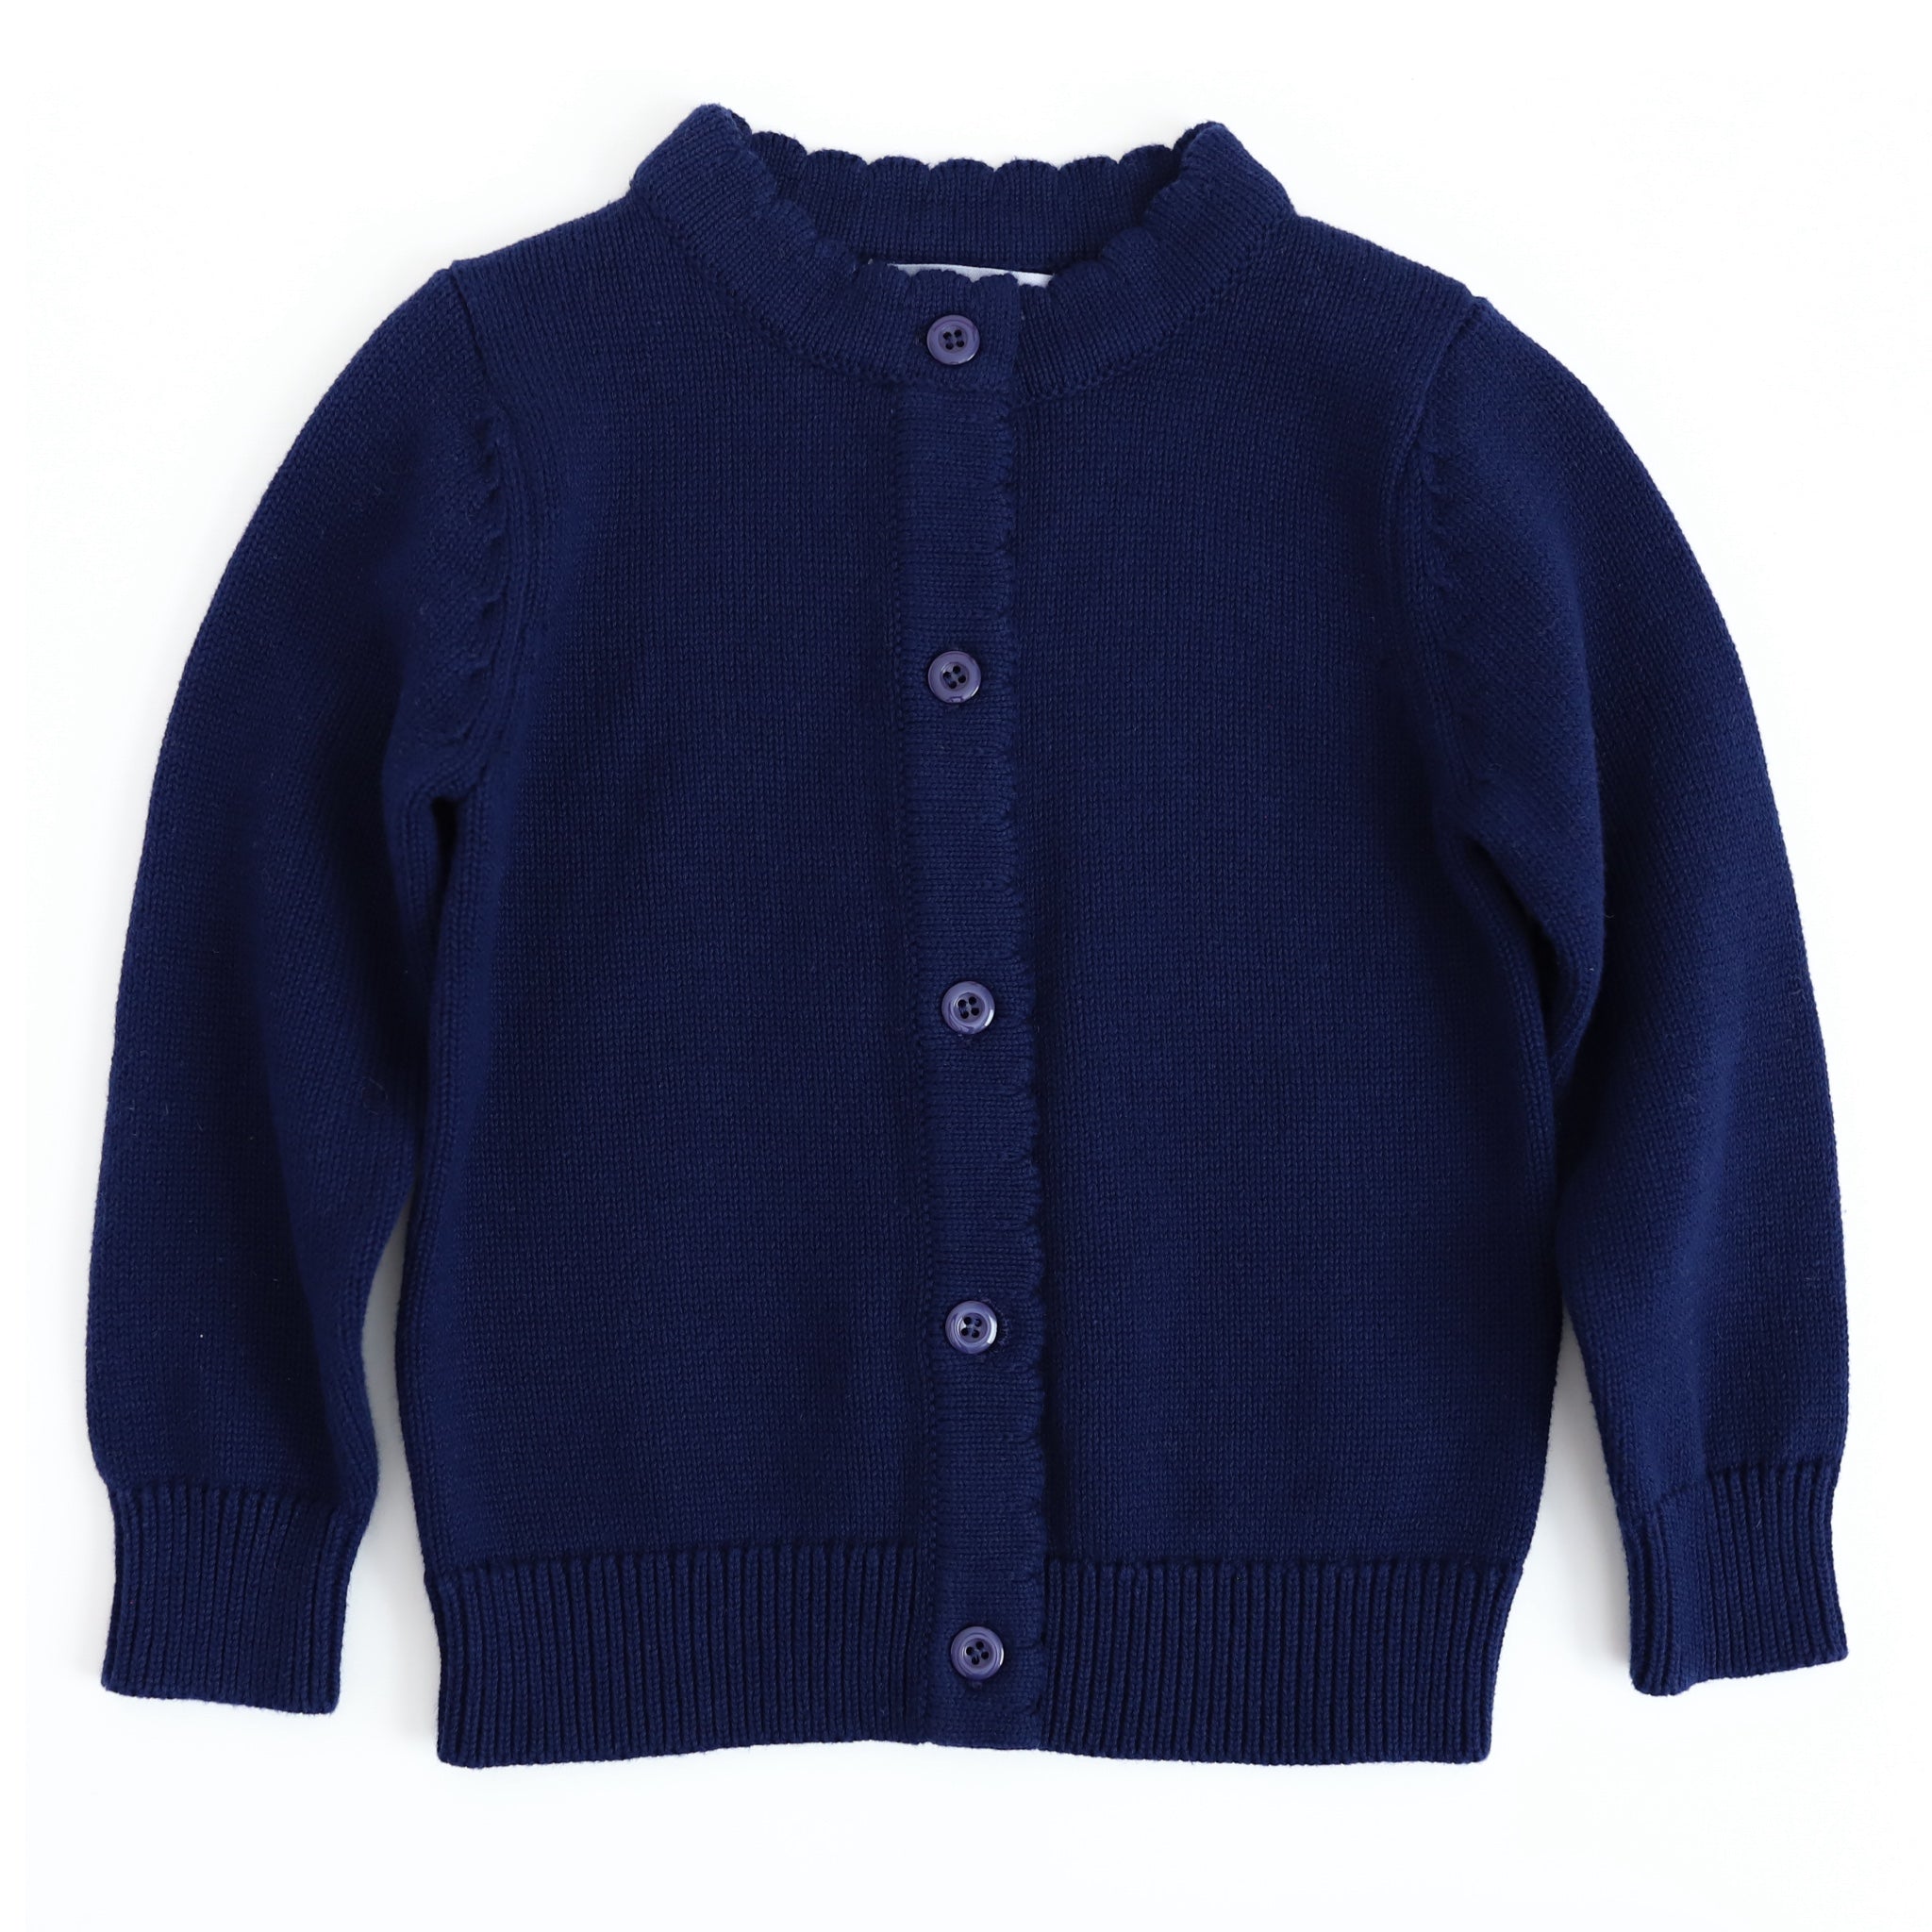 girls' navy blue cardigan sweater for school uniforms